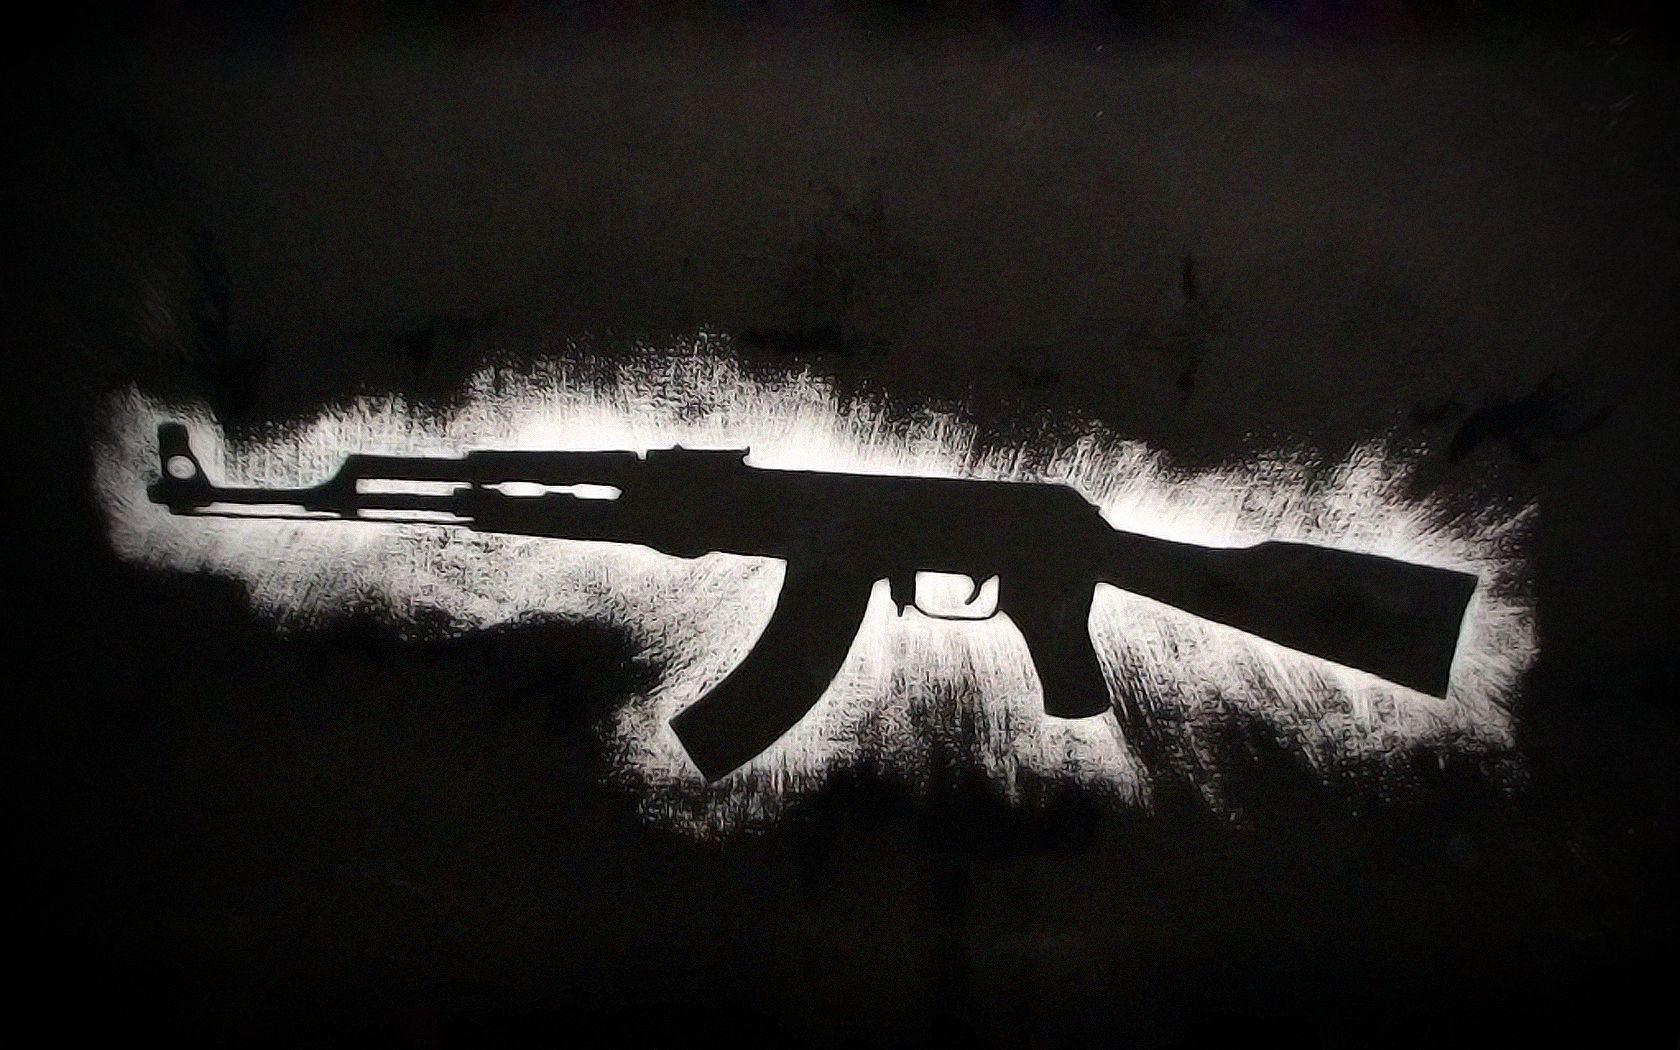 Free Download New AK 47 Gun Image